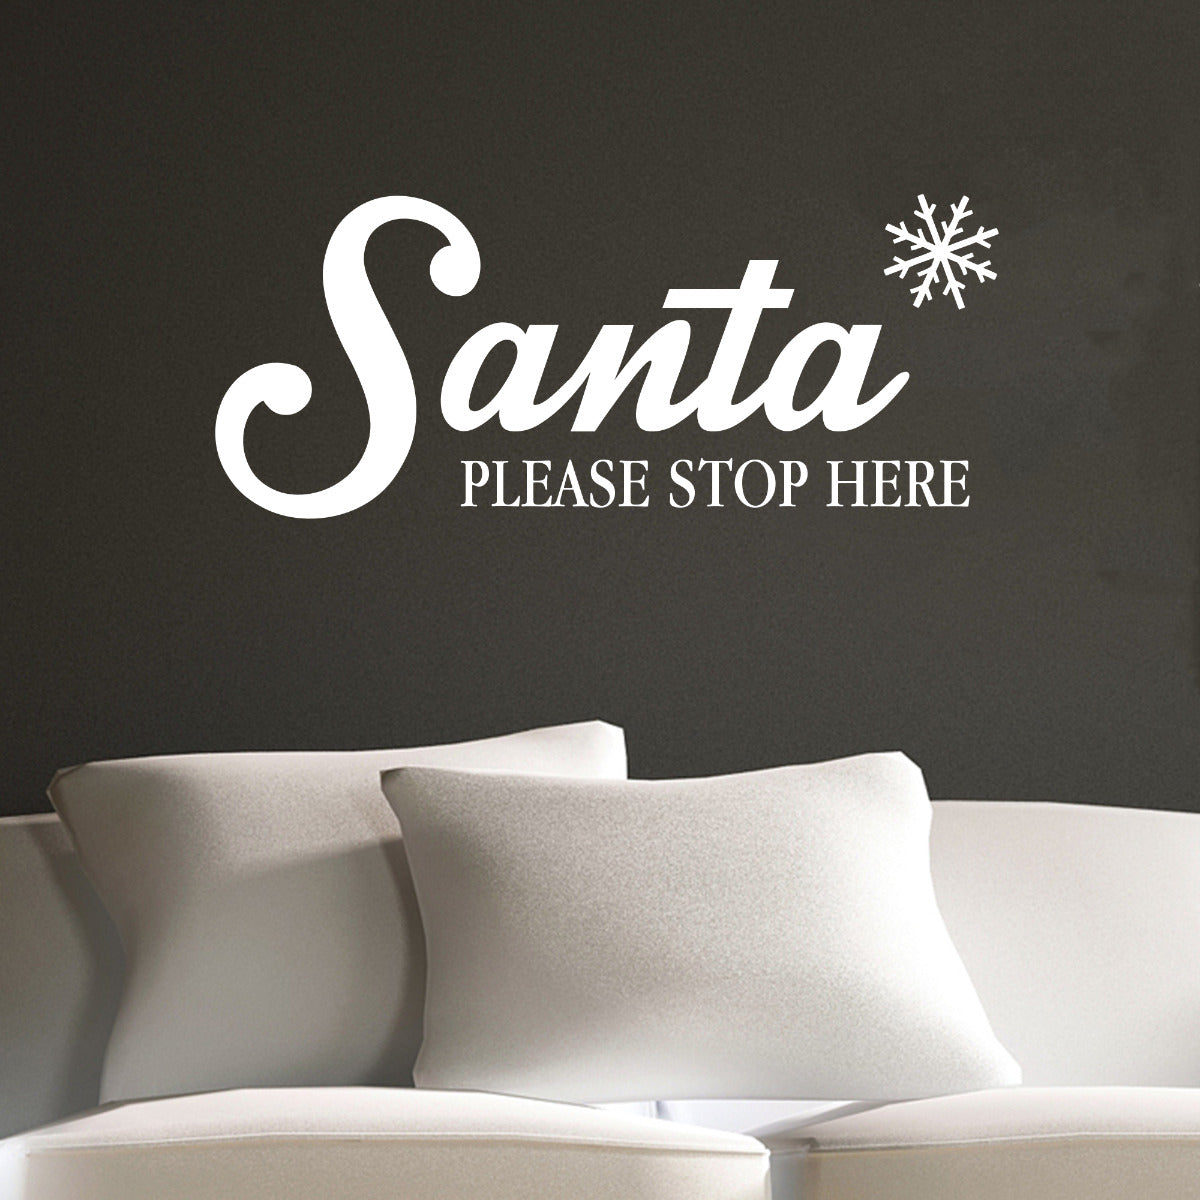 Santa Please Stop Here & Snowflake Wall Sticker